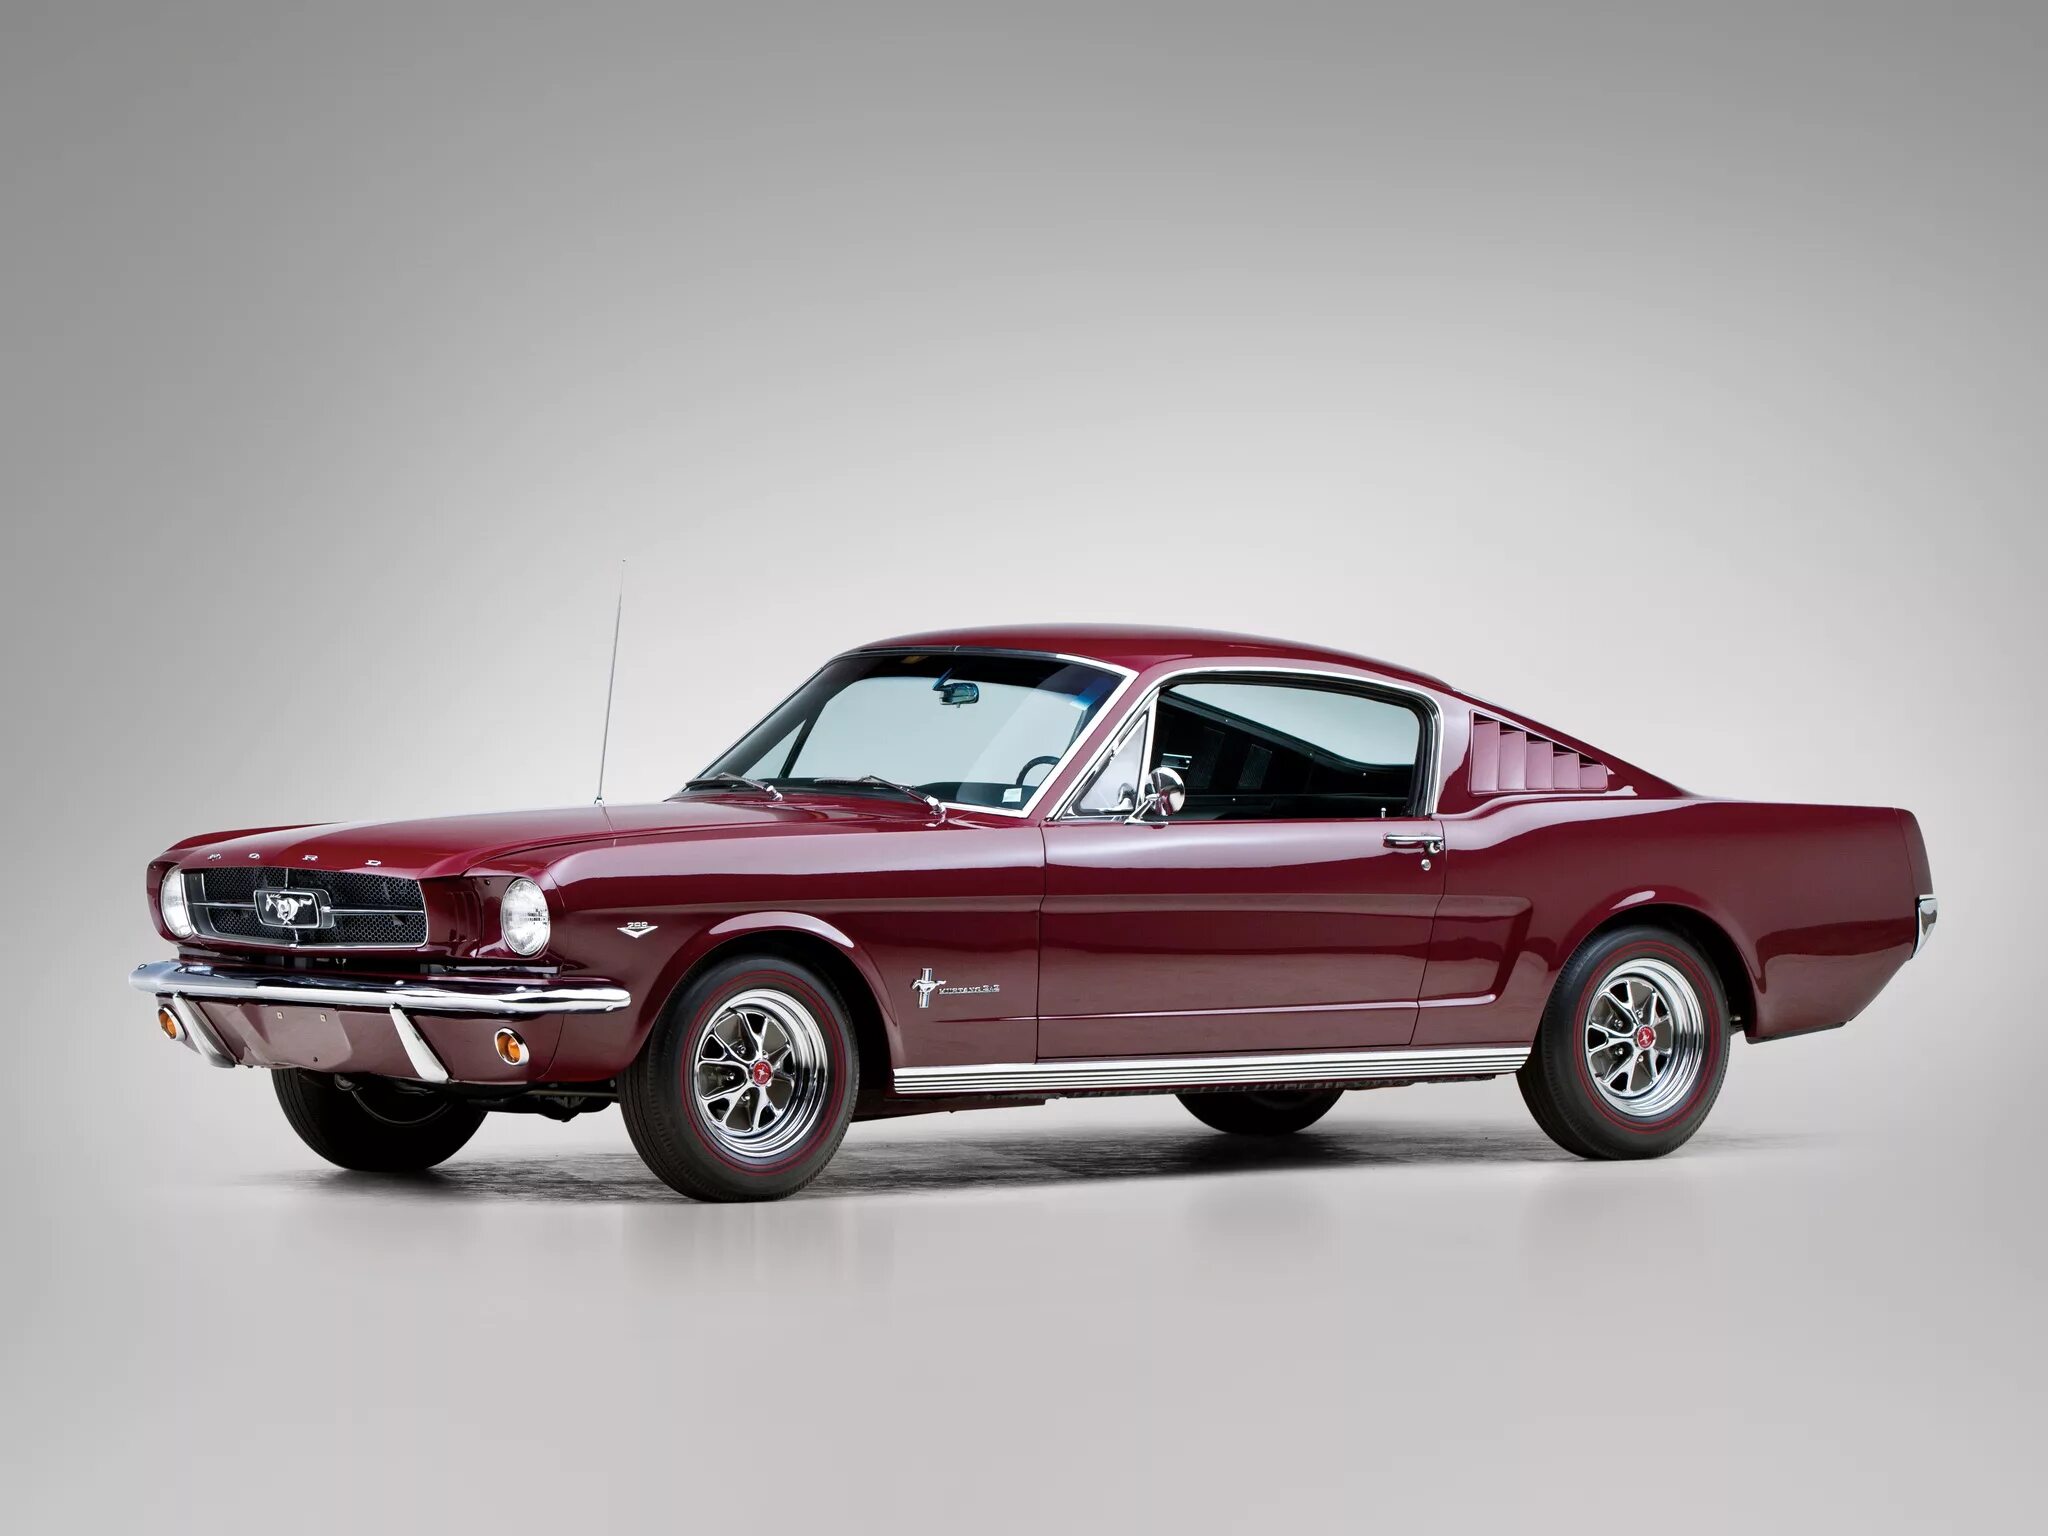 Мустанг кузова. Форд Мустанг 1 поколения. Ford Mustang Fastback 1965. Форд Мустанг 1964 фастбек. Форд Мустанг 1 поколения 1965.